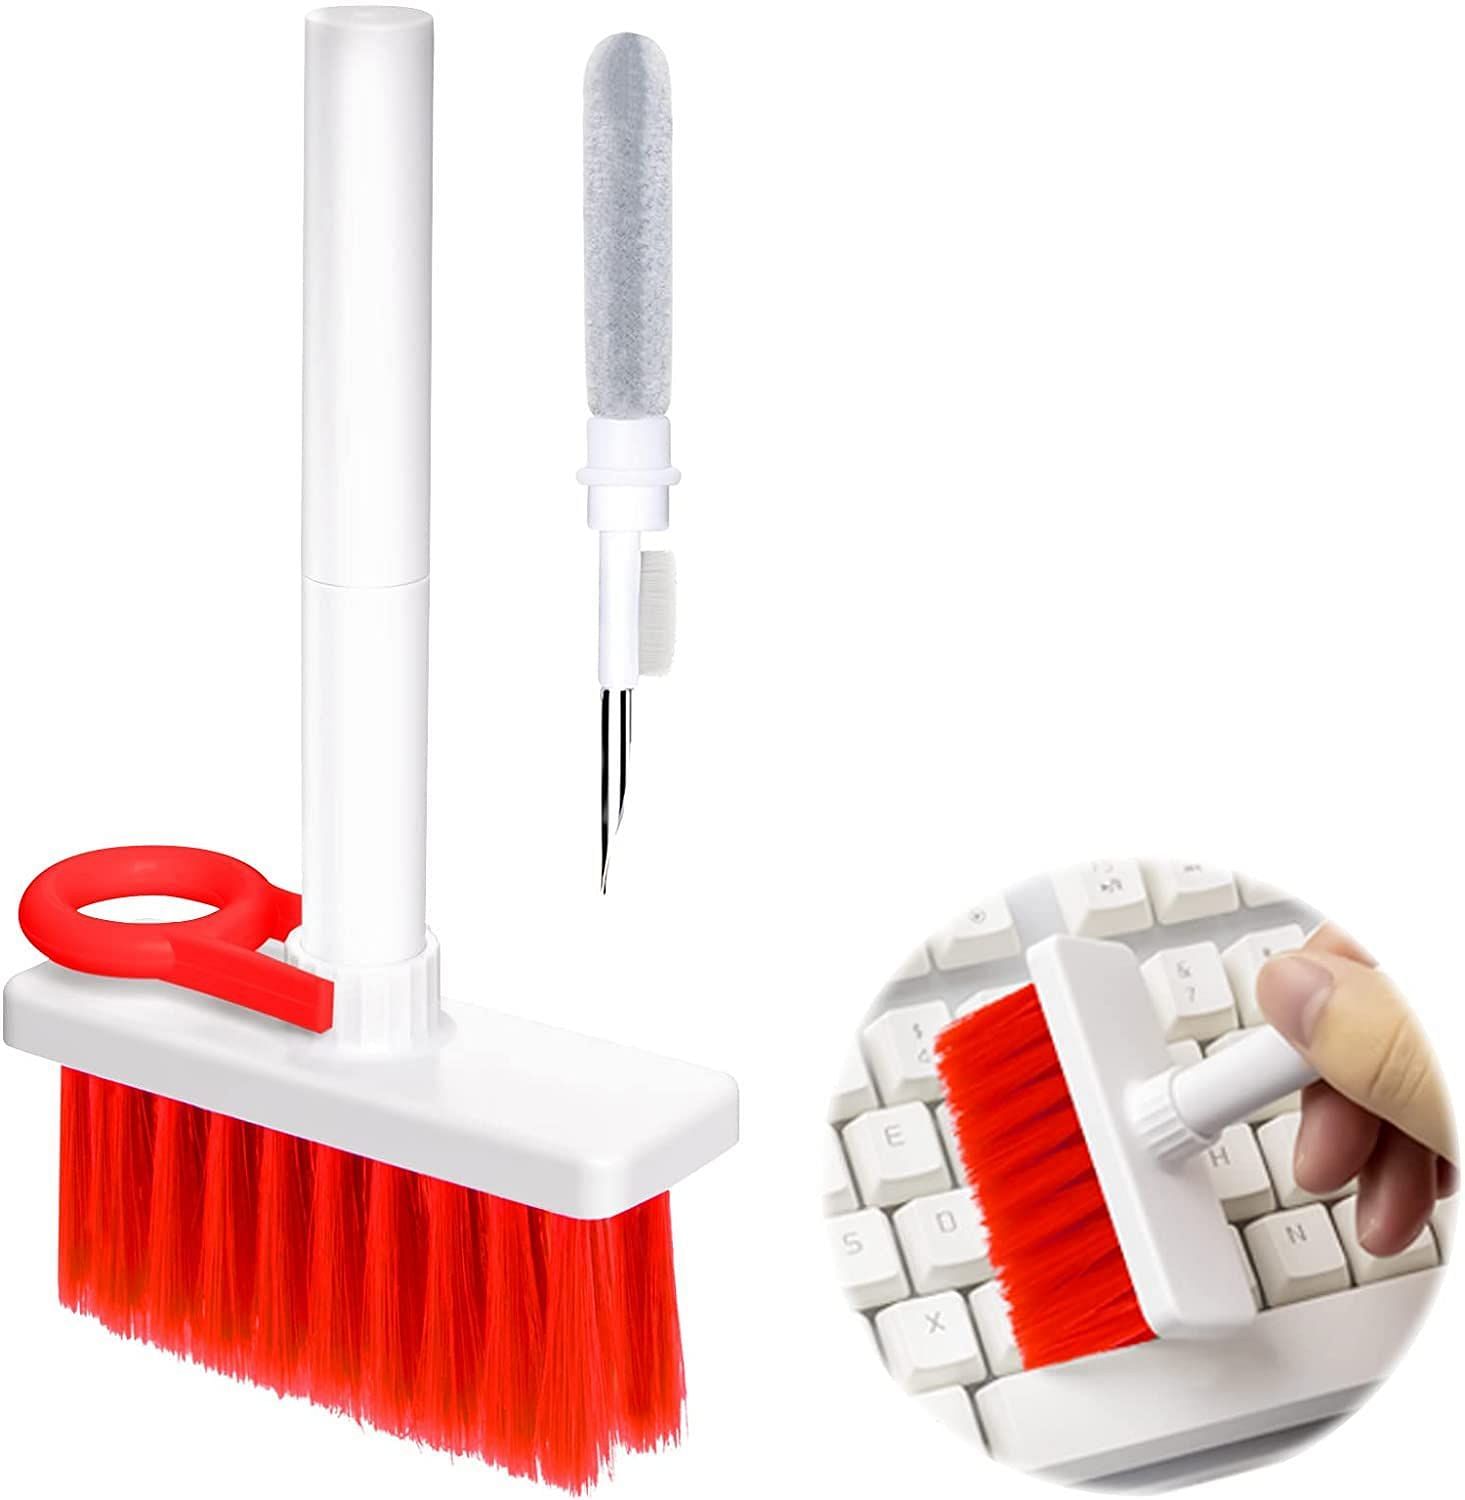 Batullo cleaning kit (Image via Amazon)